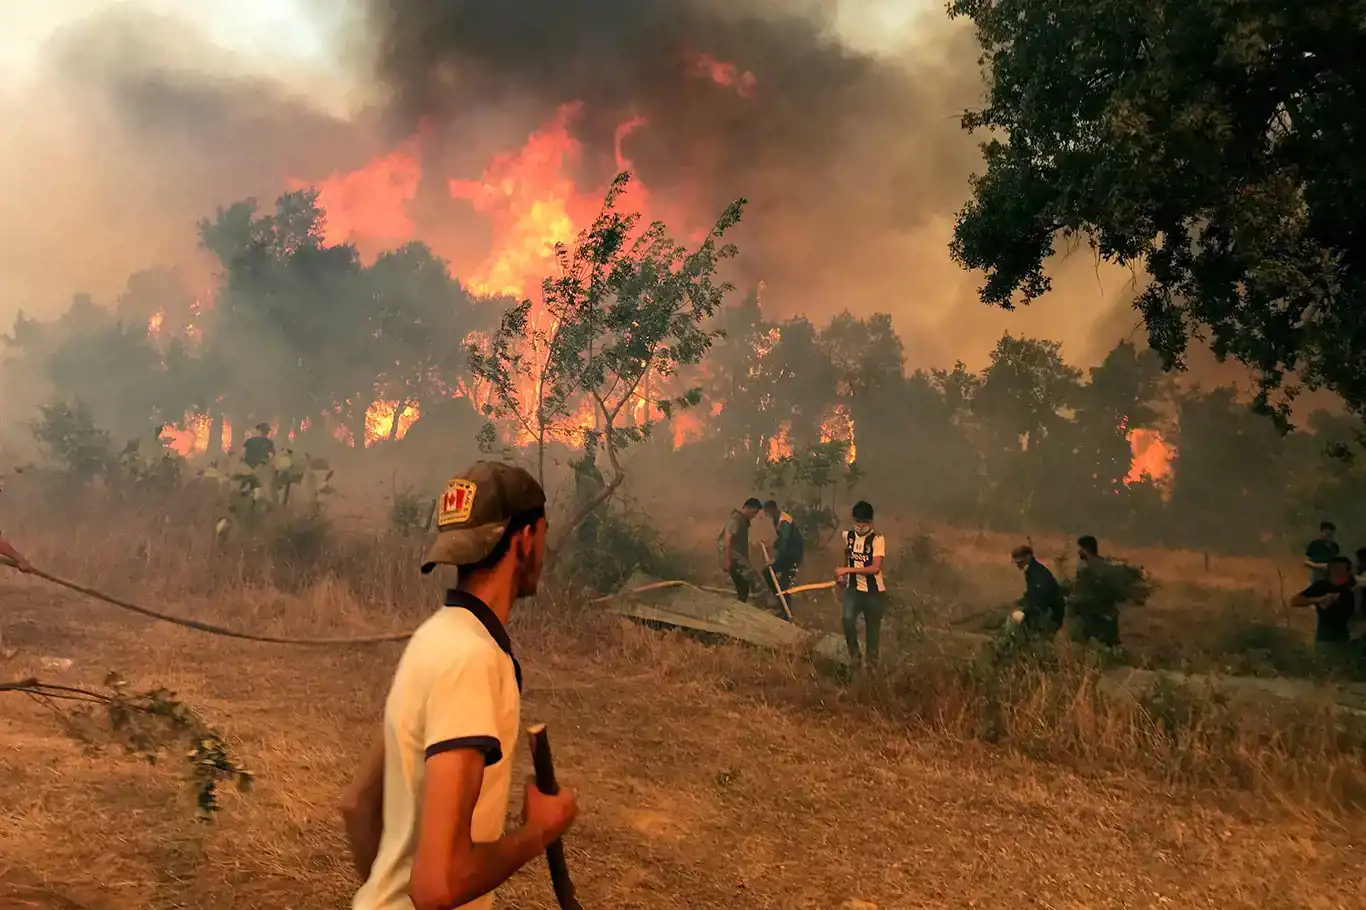 Devastating forest fires claim 34 lives in Algeria amidst North Africa's heatwave